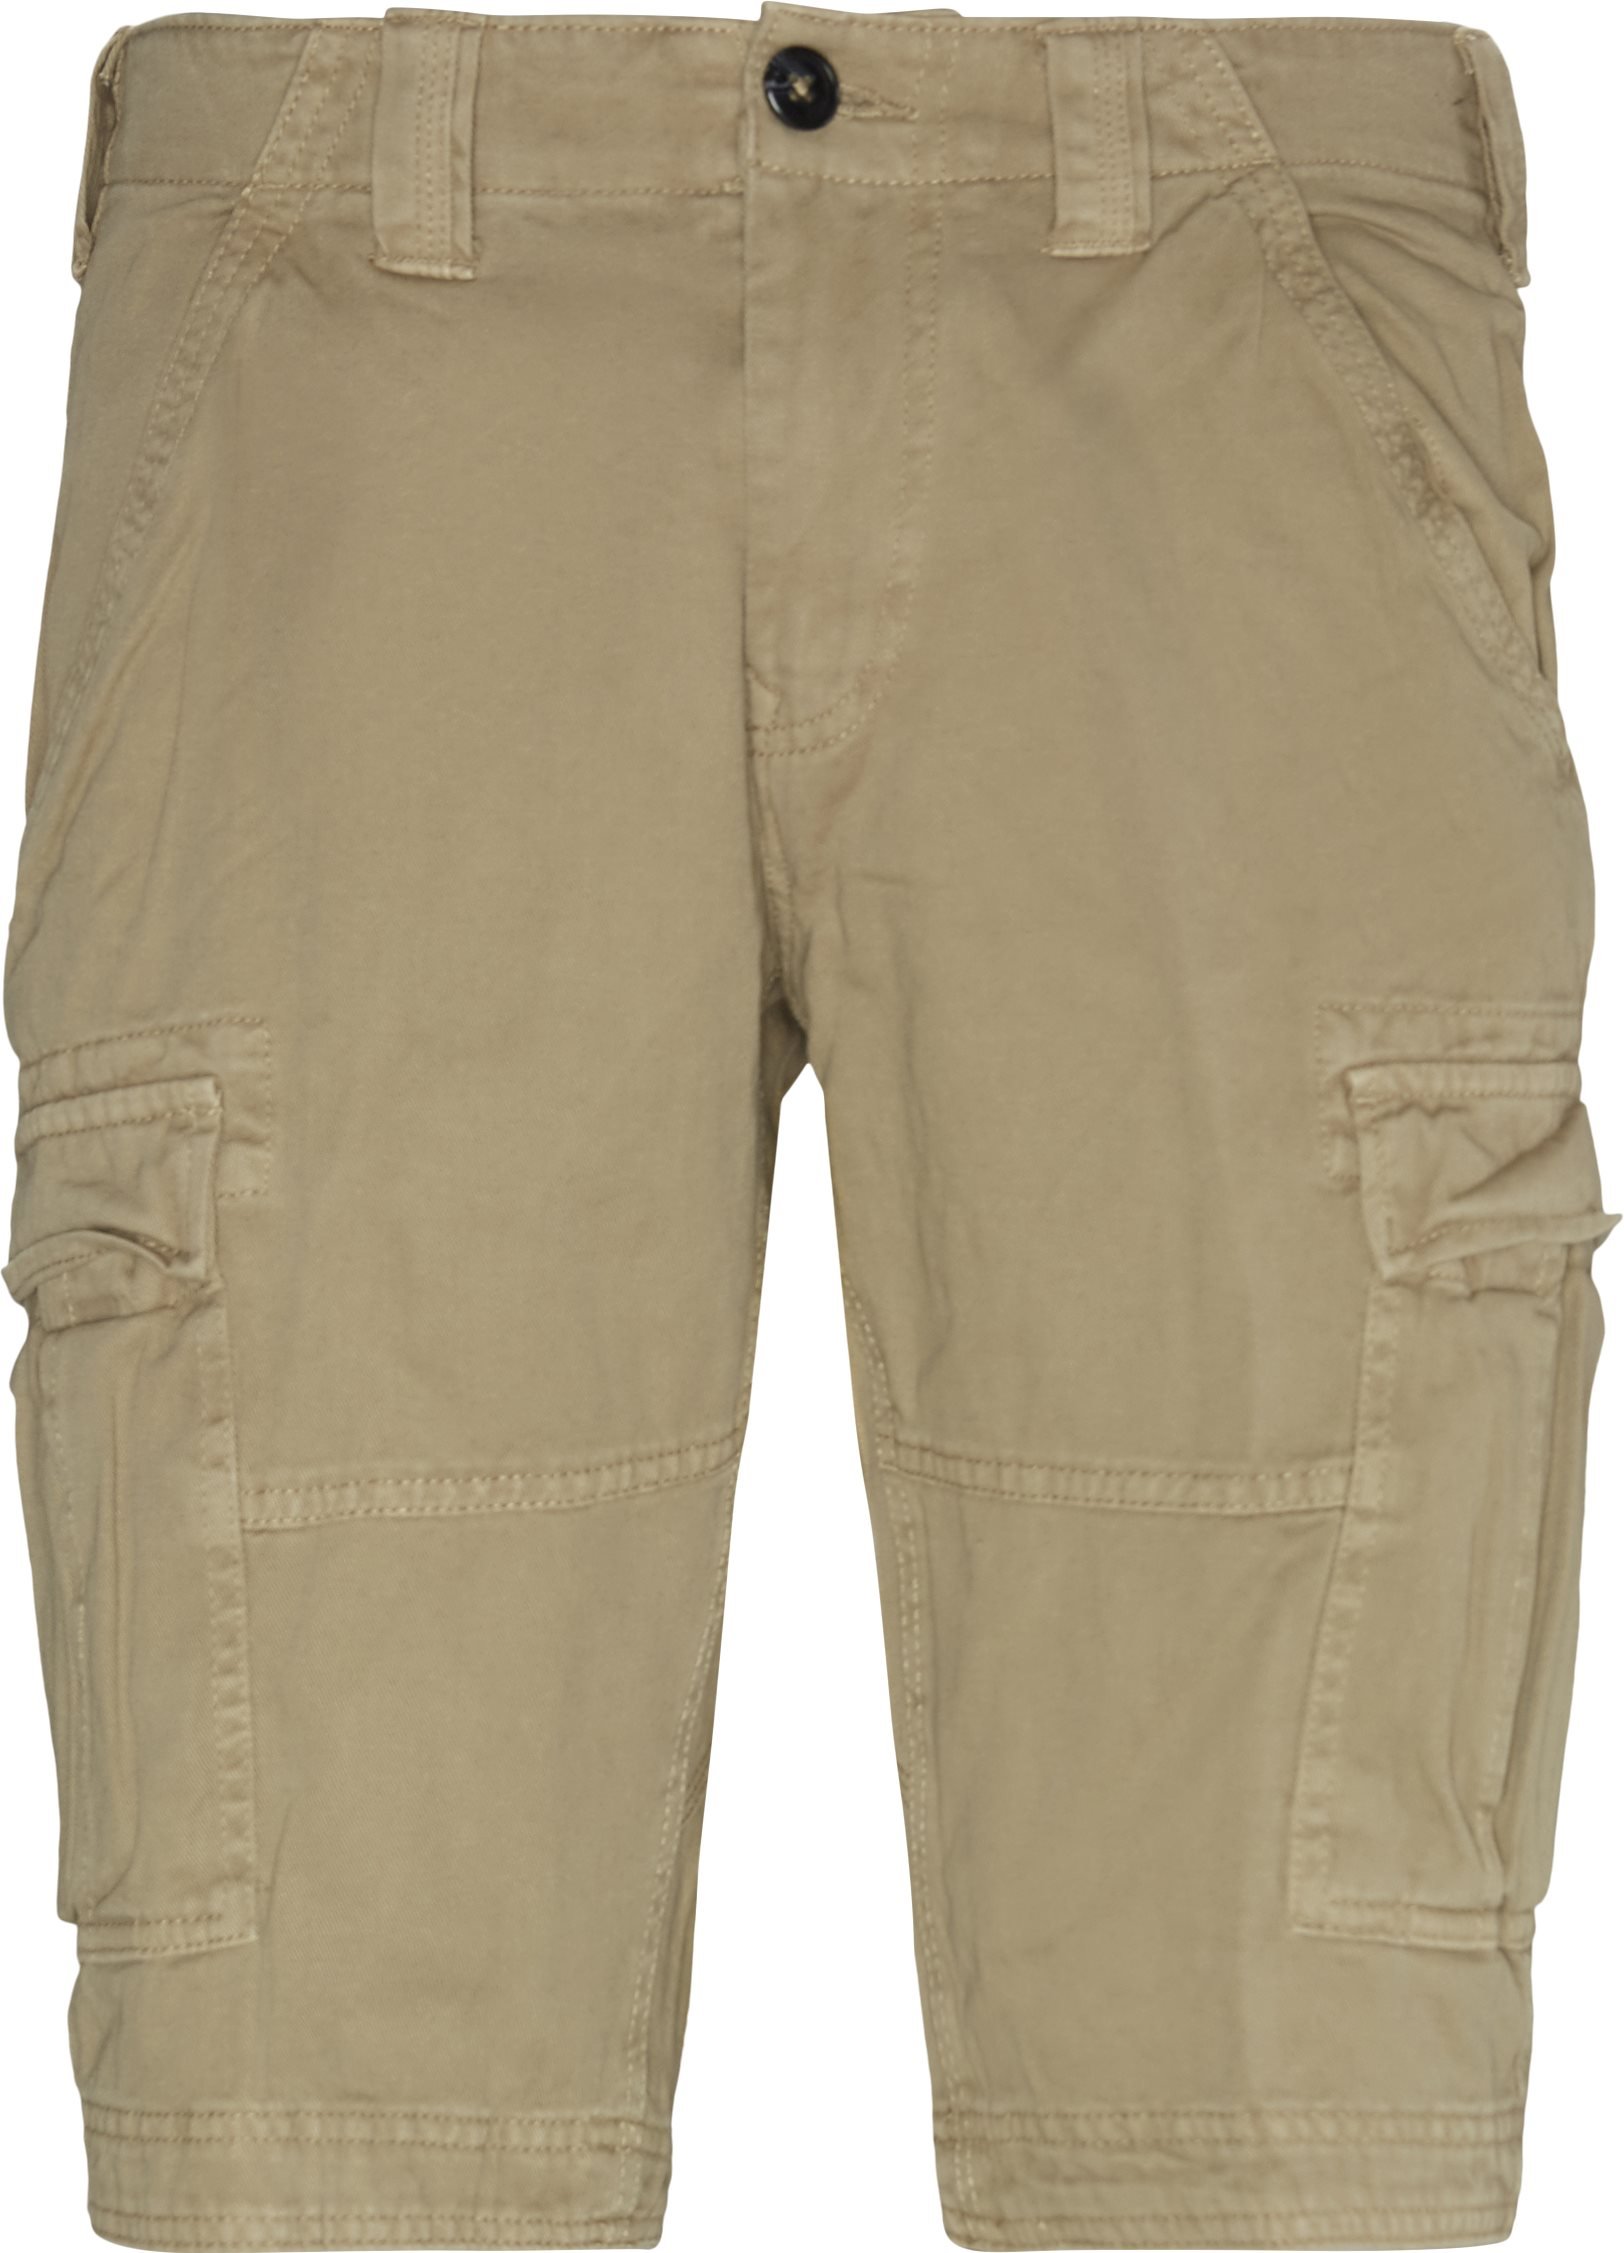 Nairobi Cargo Shorts - Shorts - Regular fit - Sand